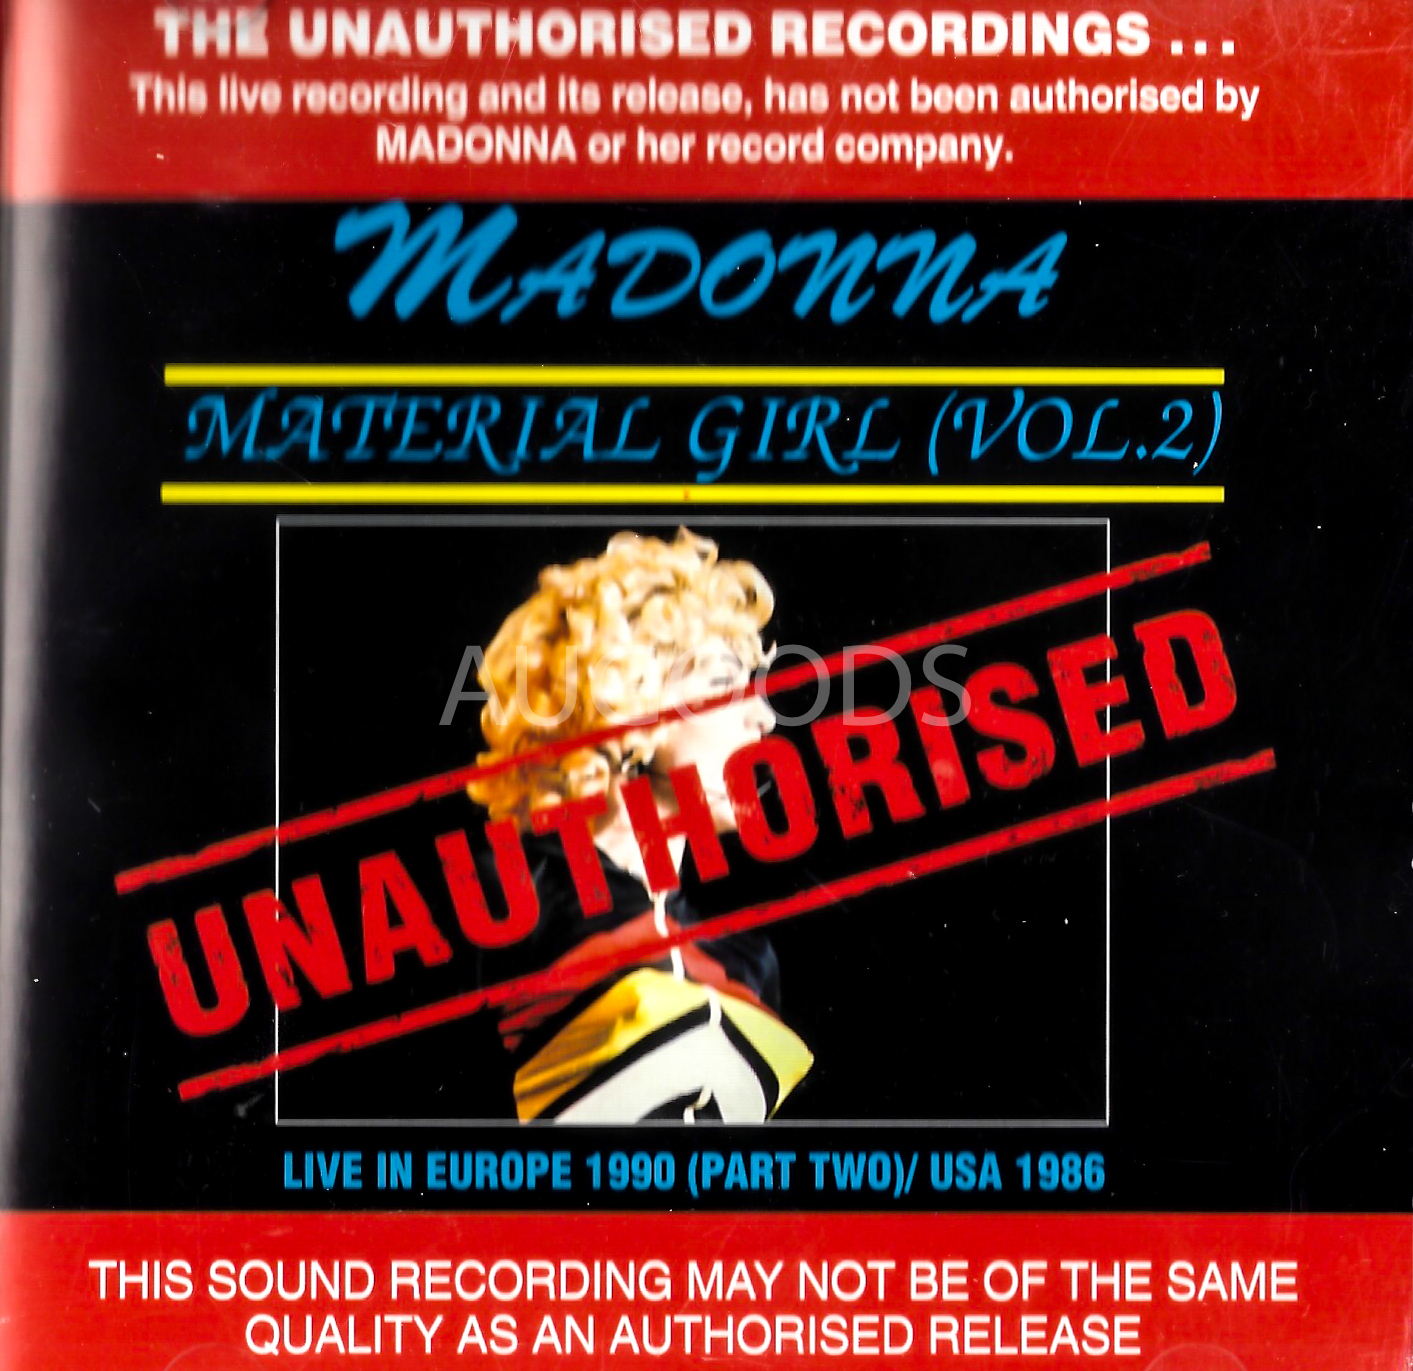 Madonna Material Girl Vol2 Brand New Sealed Music Album Cd Au Stock 766111102629 Ebay 